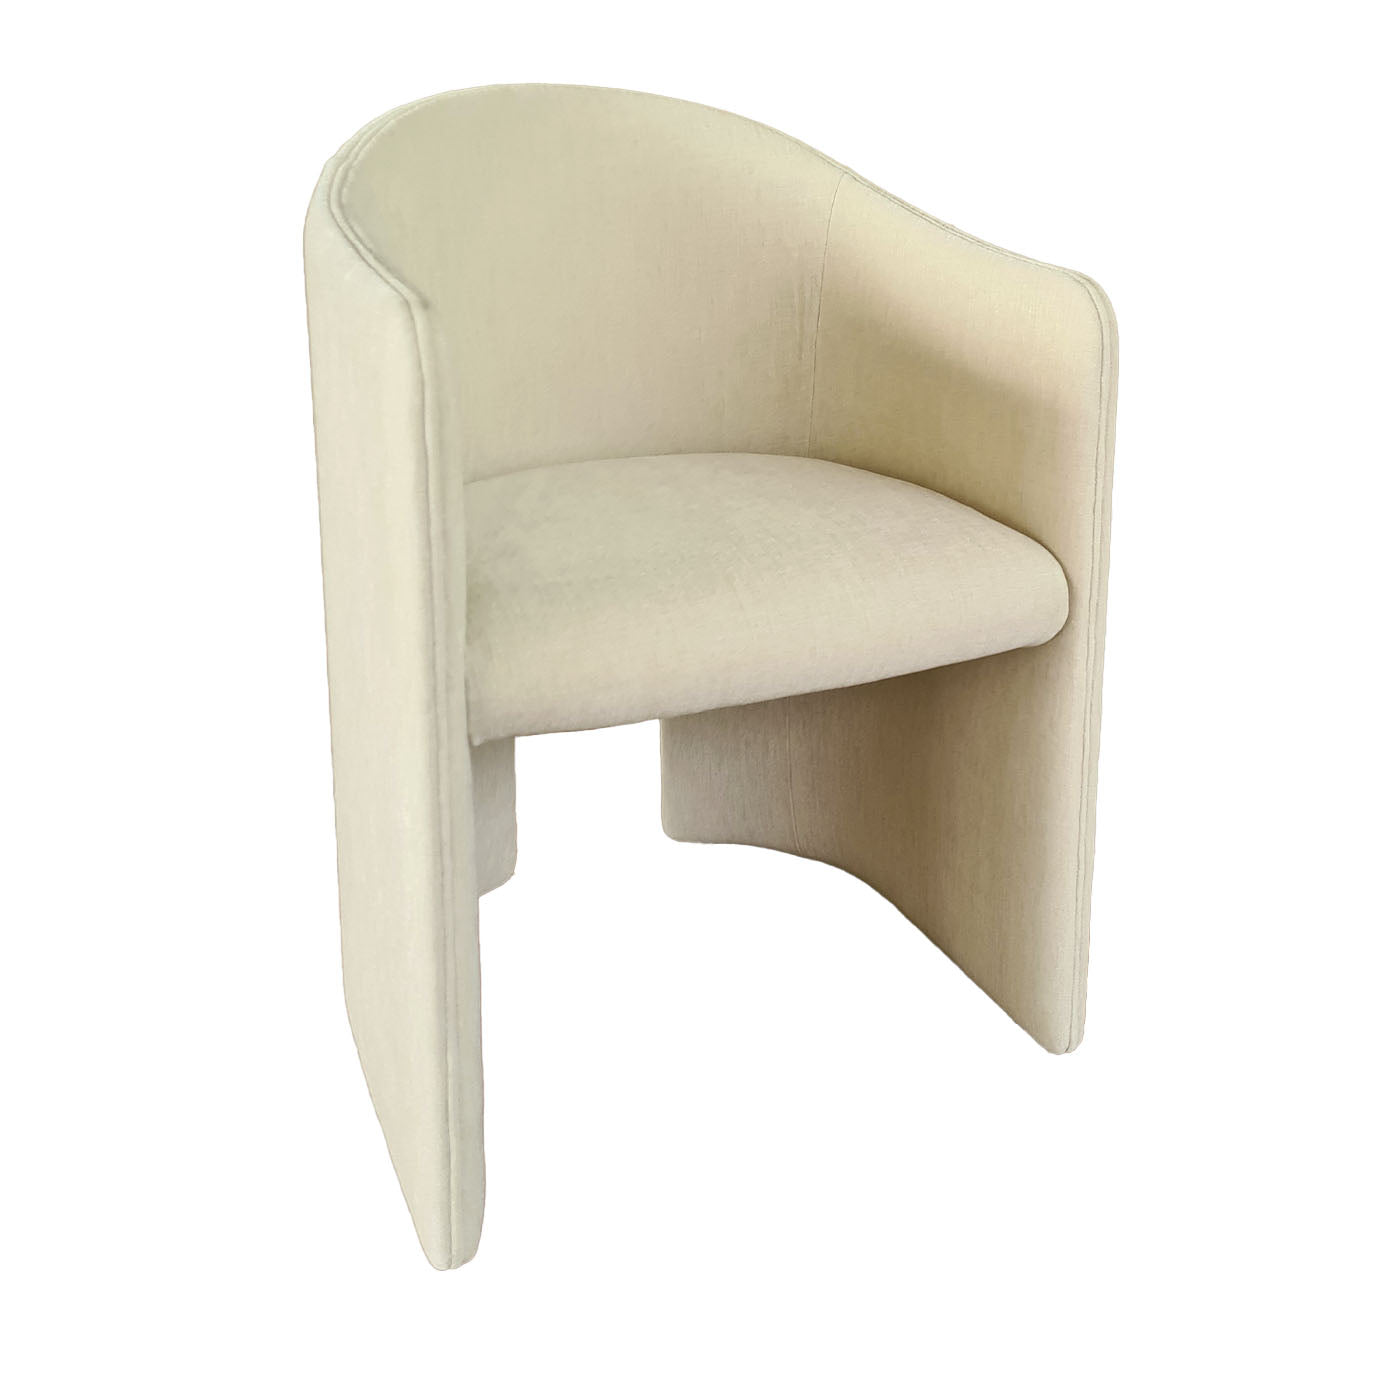 Brera White Chair By Dainelli Studio - Main view